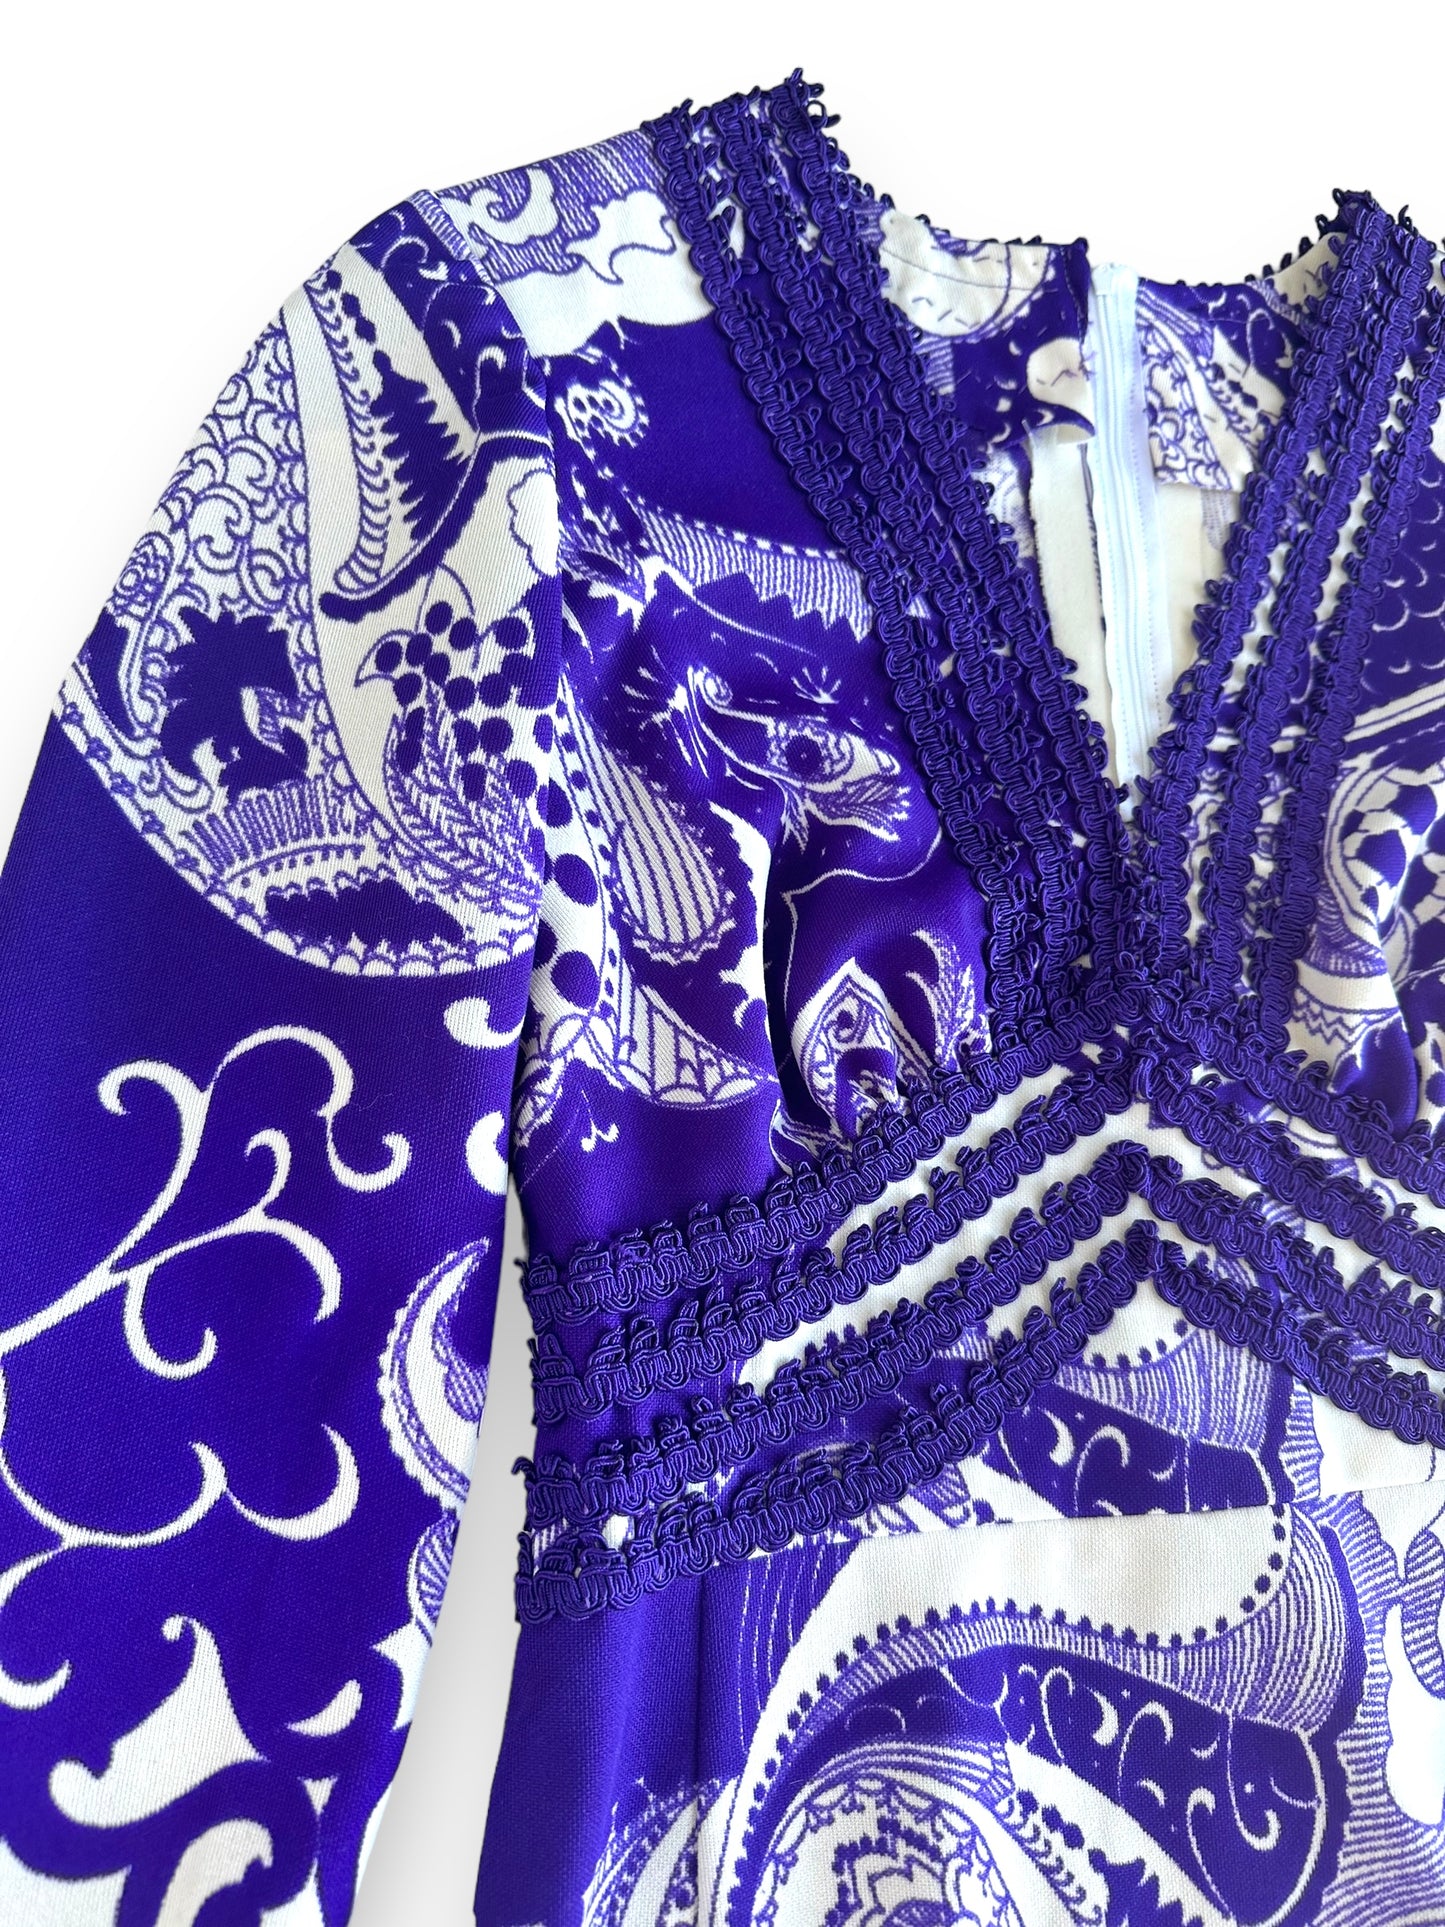 1970s Handmade Purple + Creme Print Hippie Dress